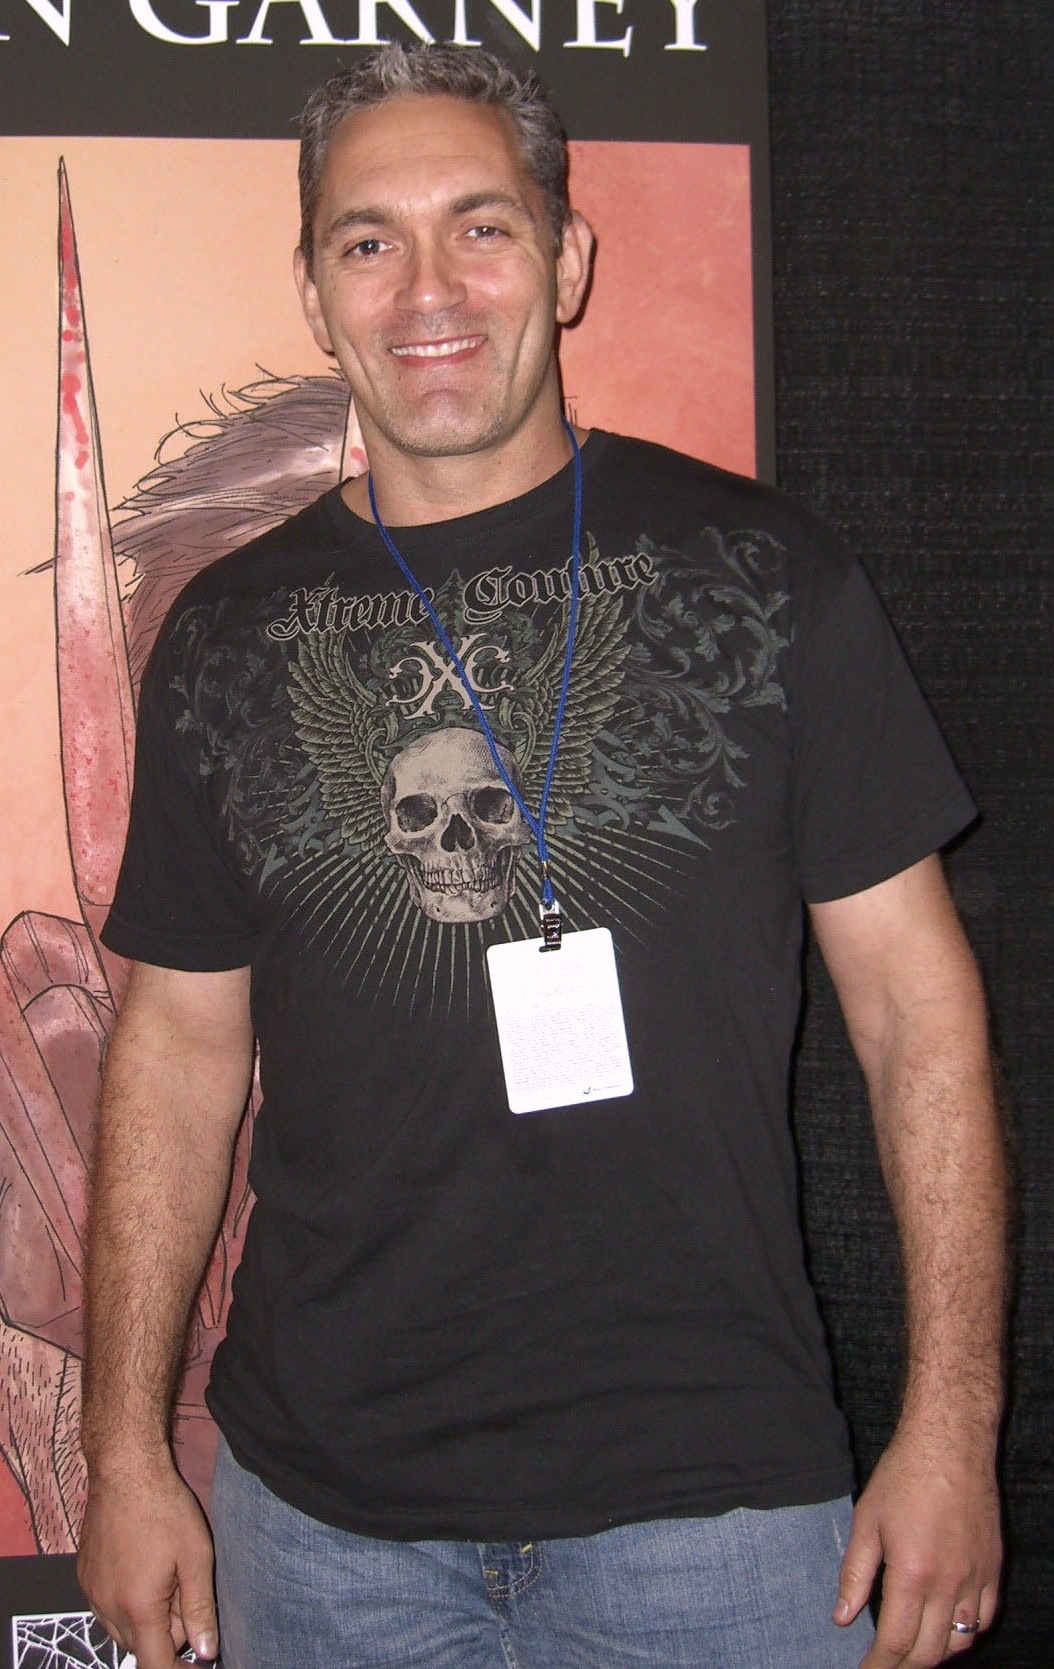 Garney at the [[New York Comic Con]] in Manhattan, October 9, 2010